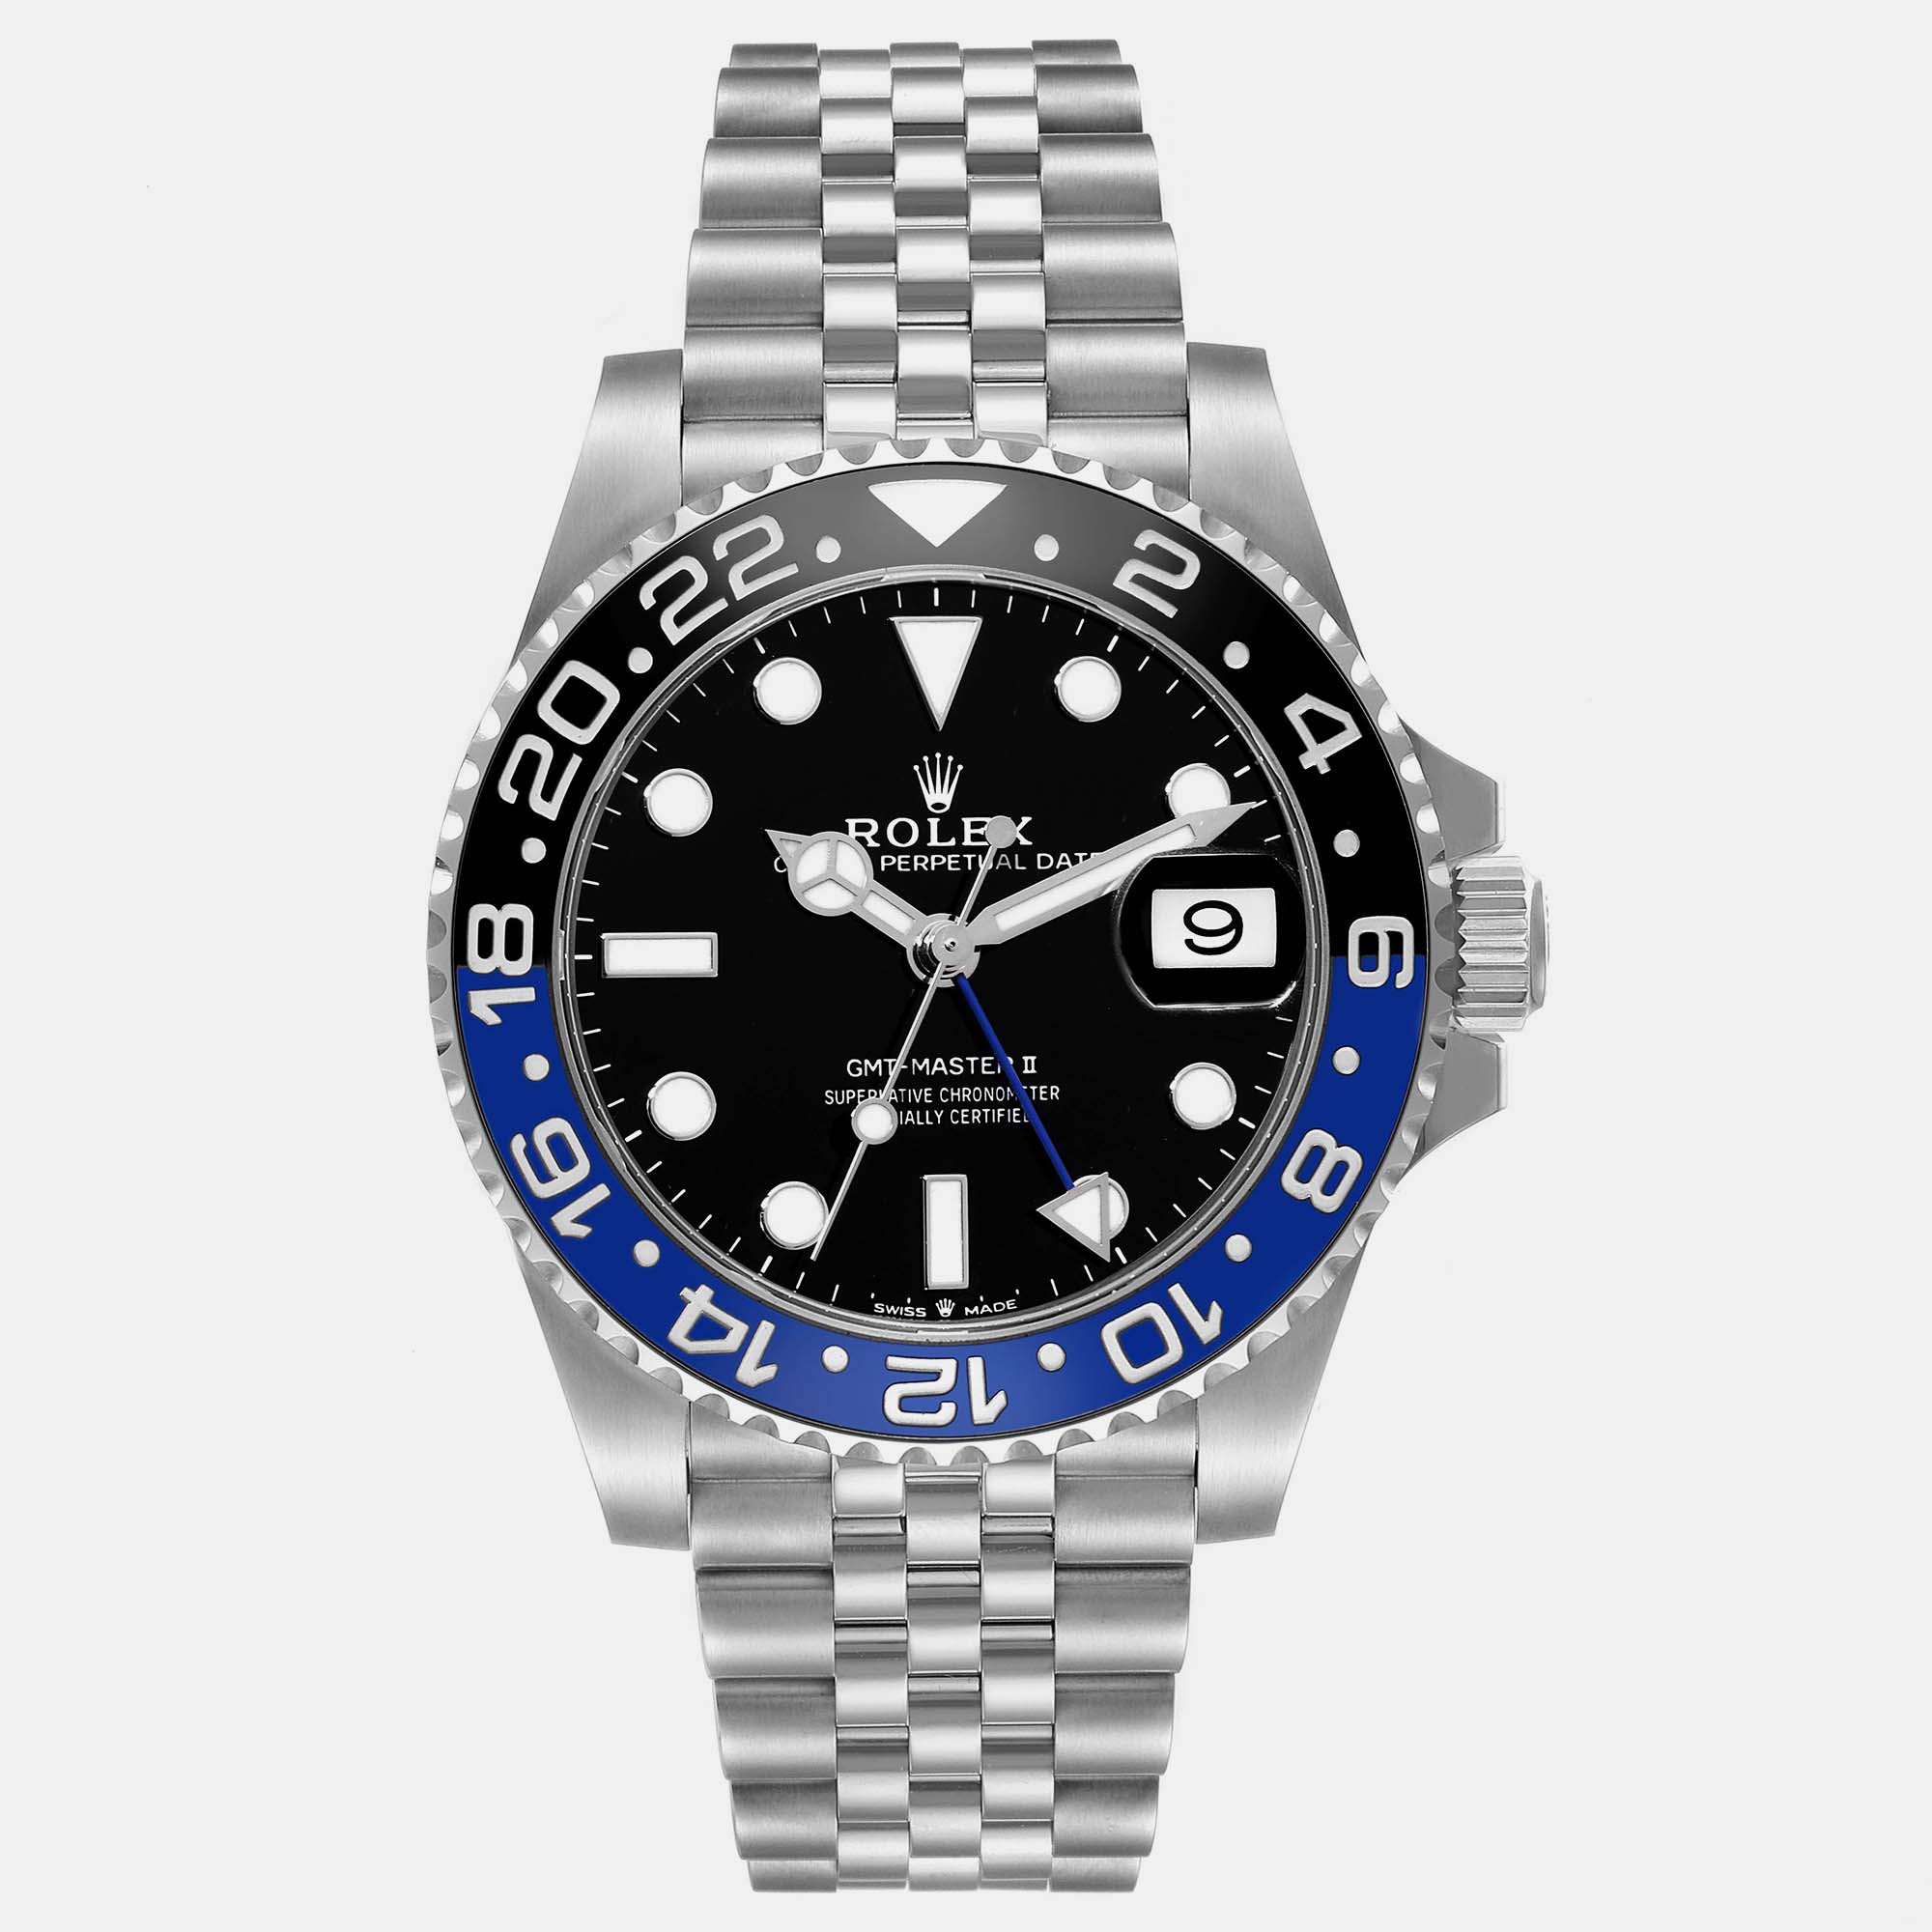 Rolex gmt master ii batgirl black blue bezel steel men's watch 40 mm